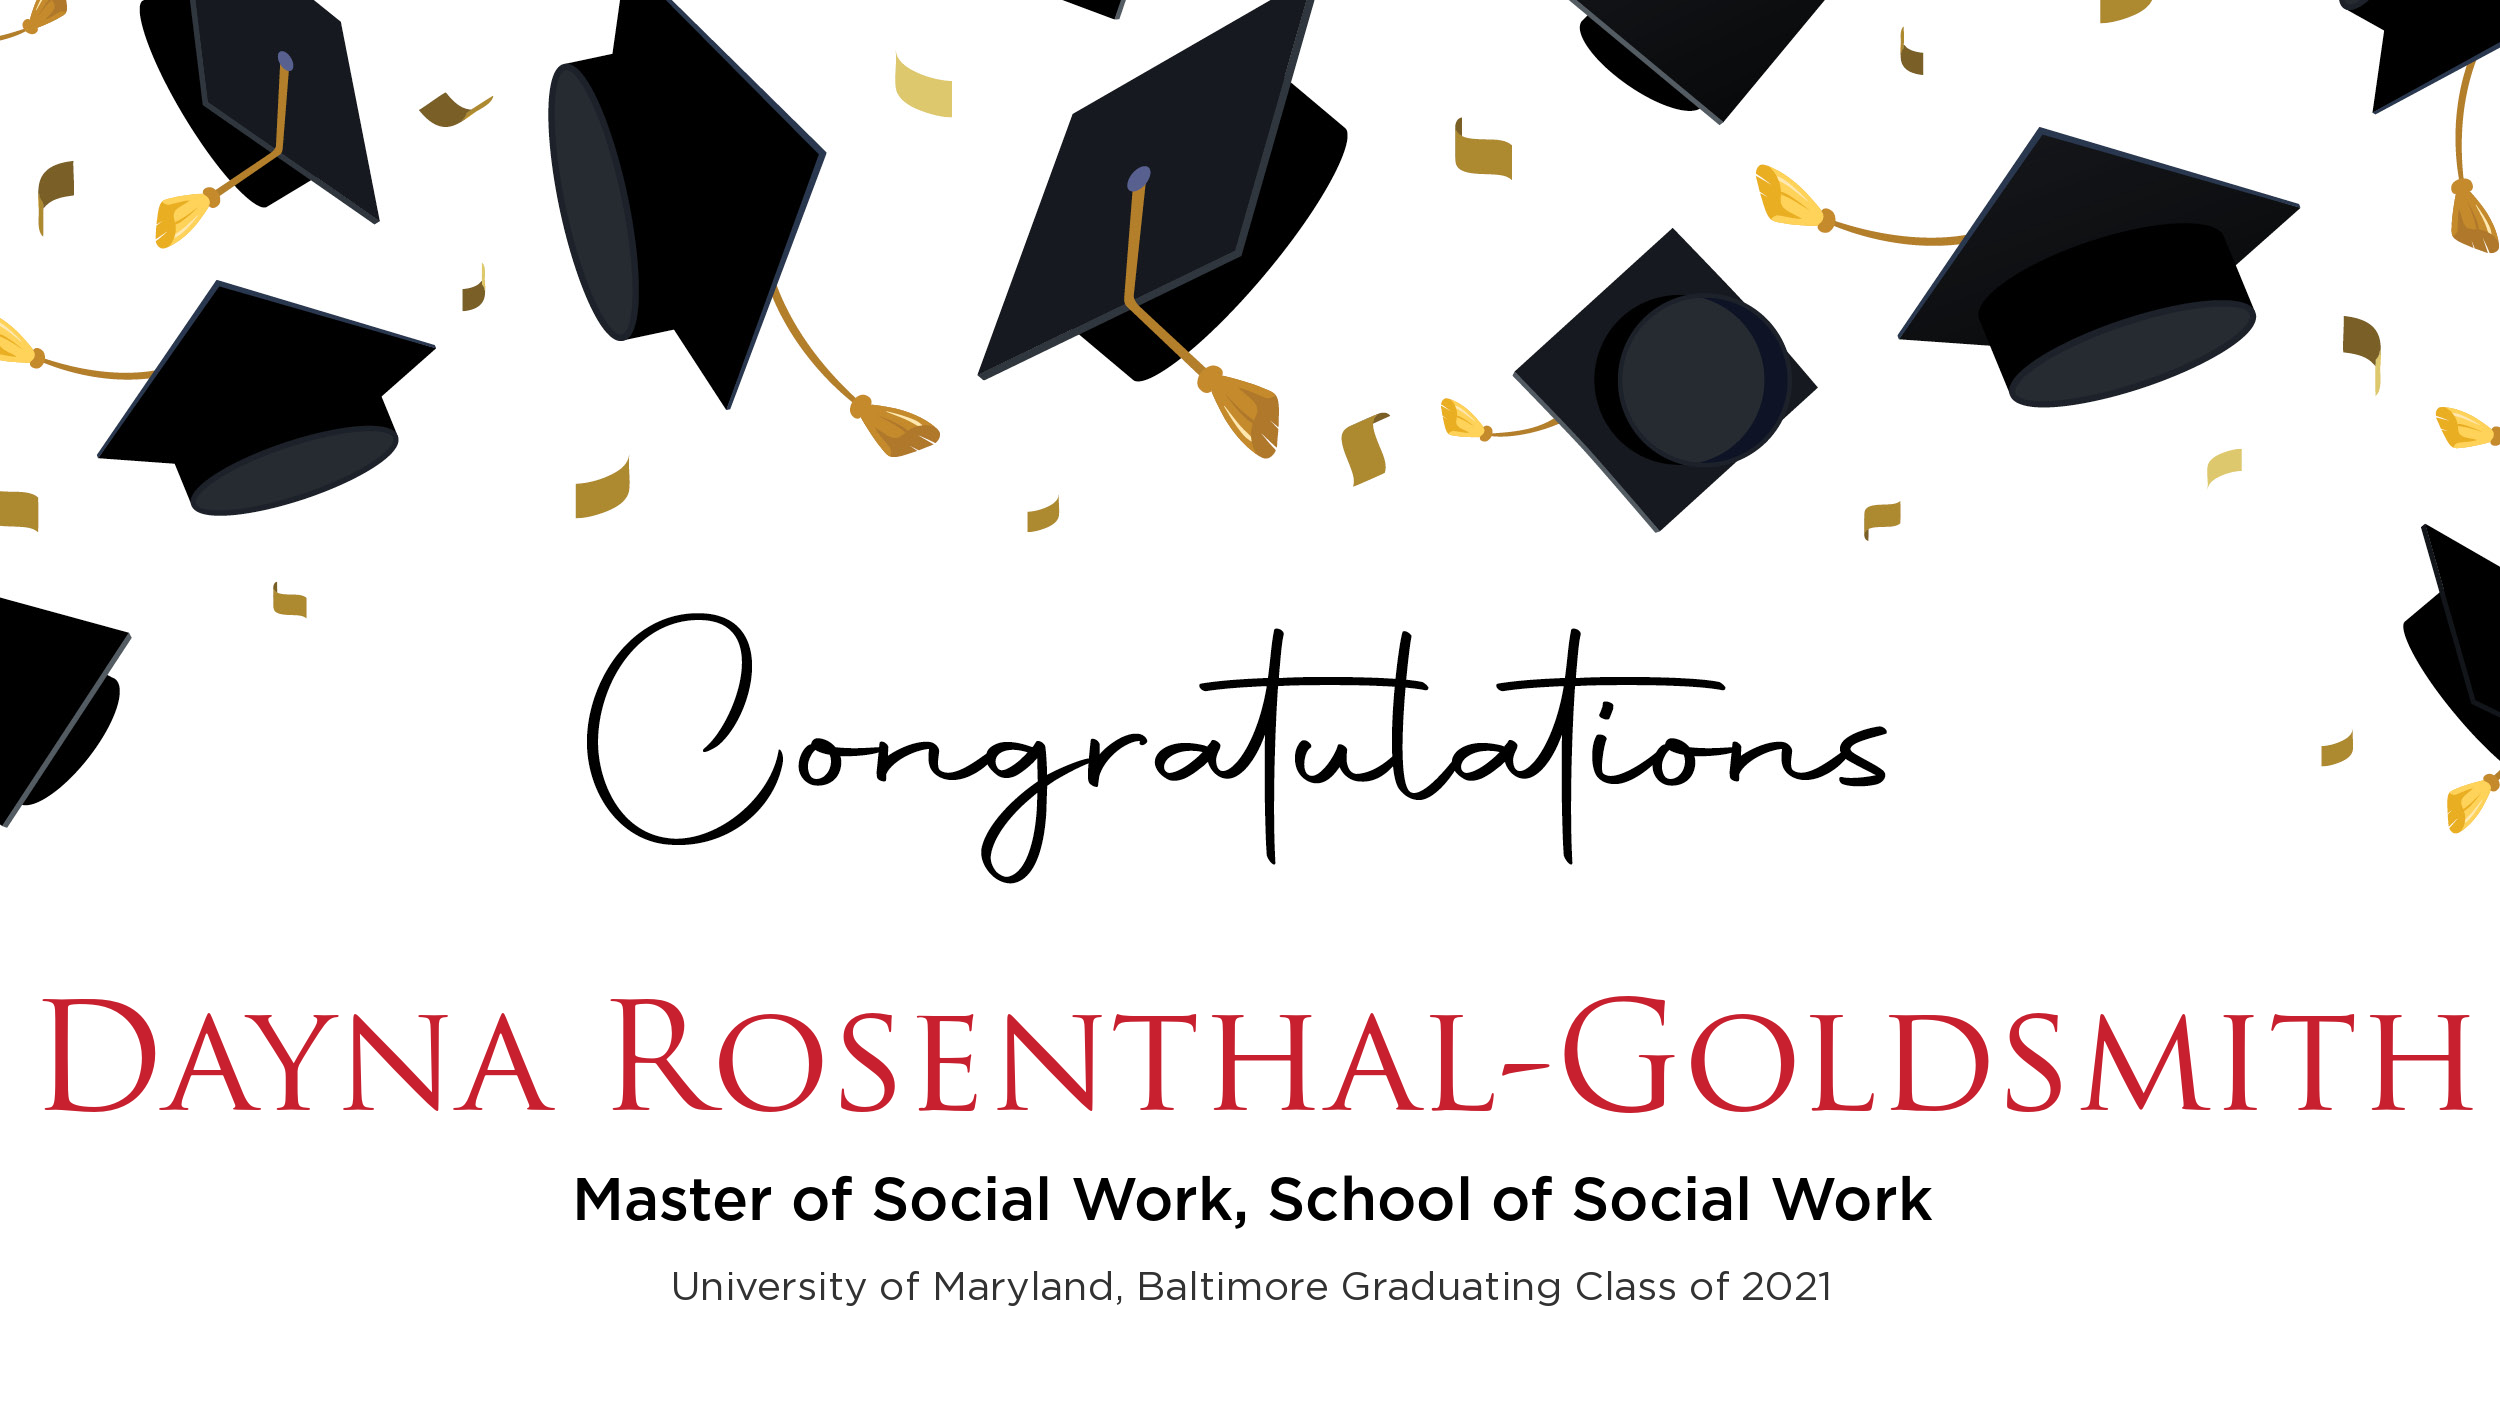 Congratulations Dayna Rosenthal-Goldsmith, Master of Social Work